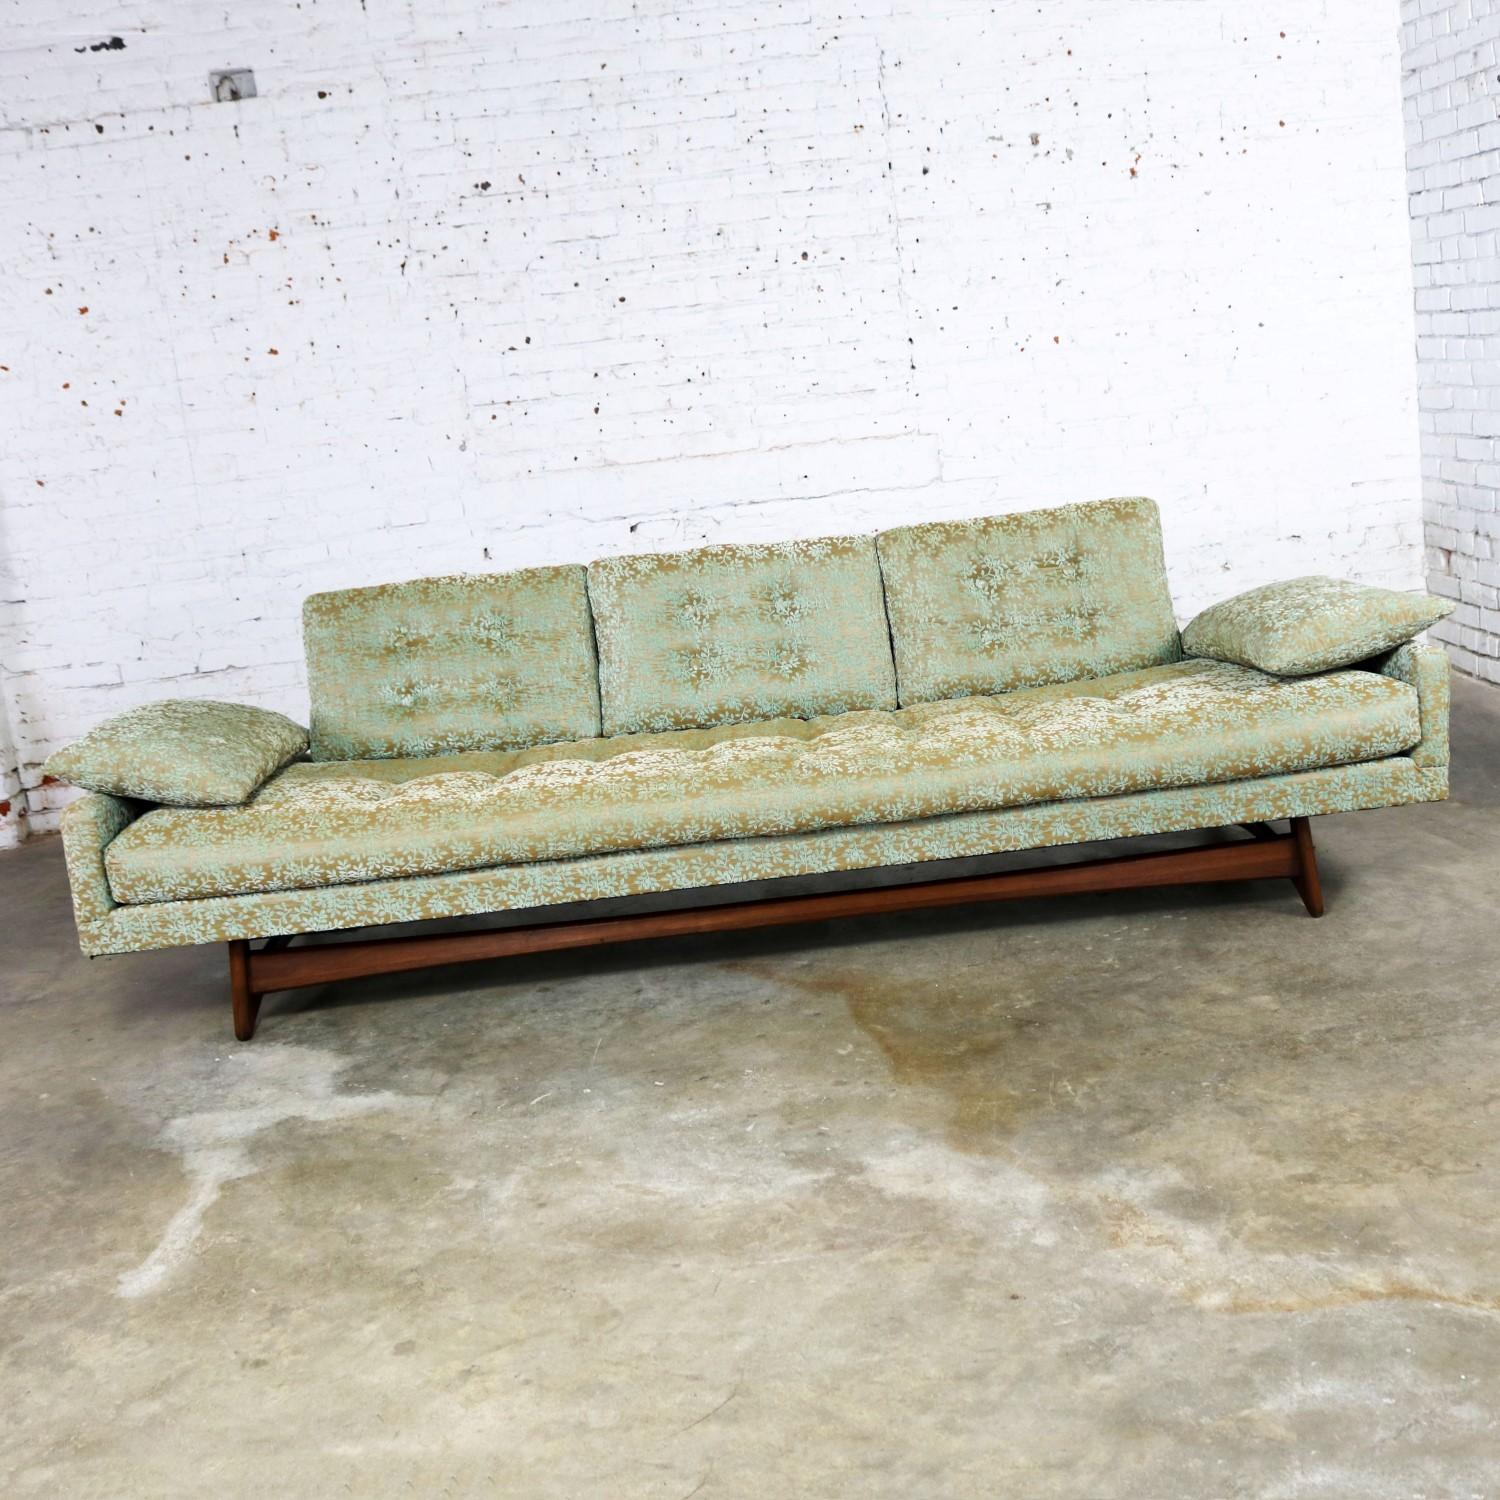 Fabric Adrian Pearsall 2408-S Gondola Sofa for Craft Associates